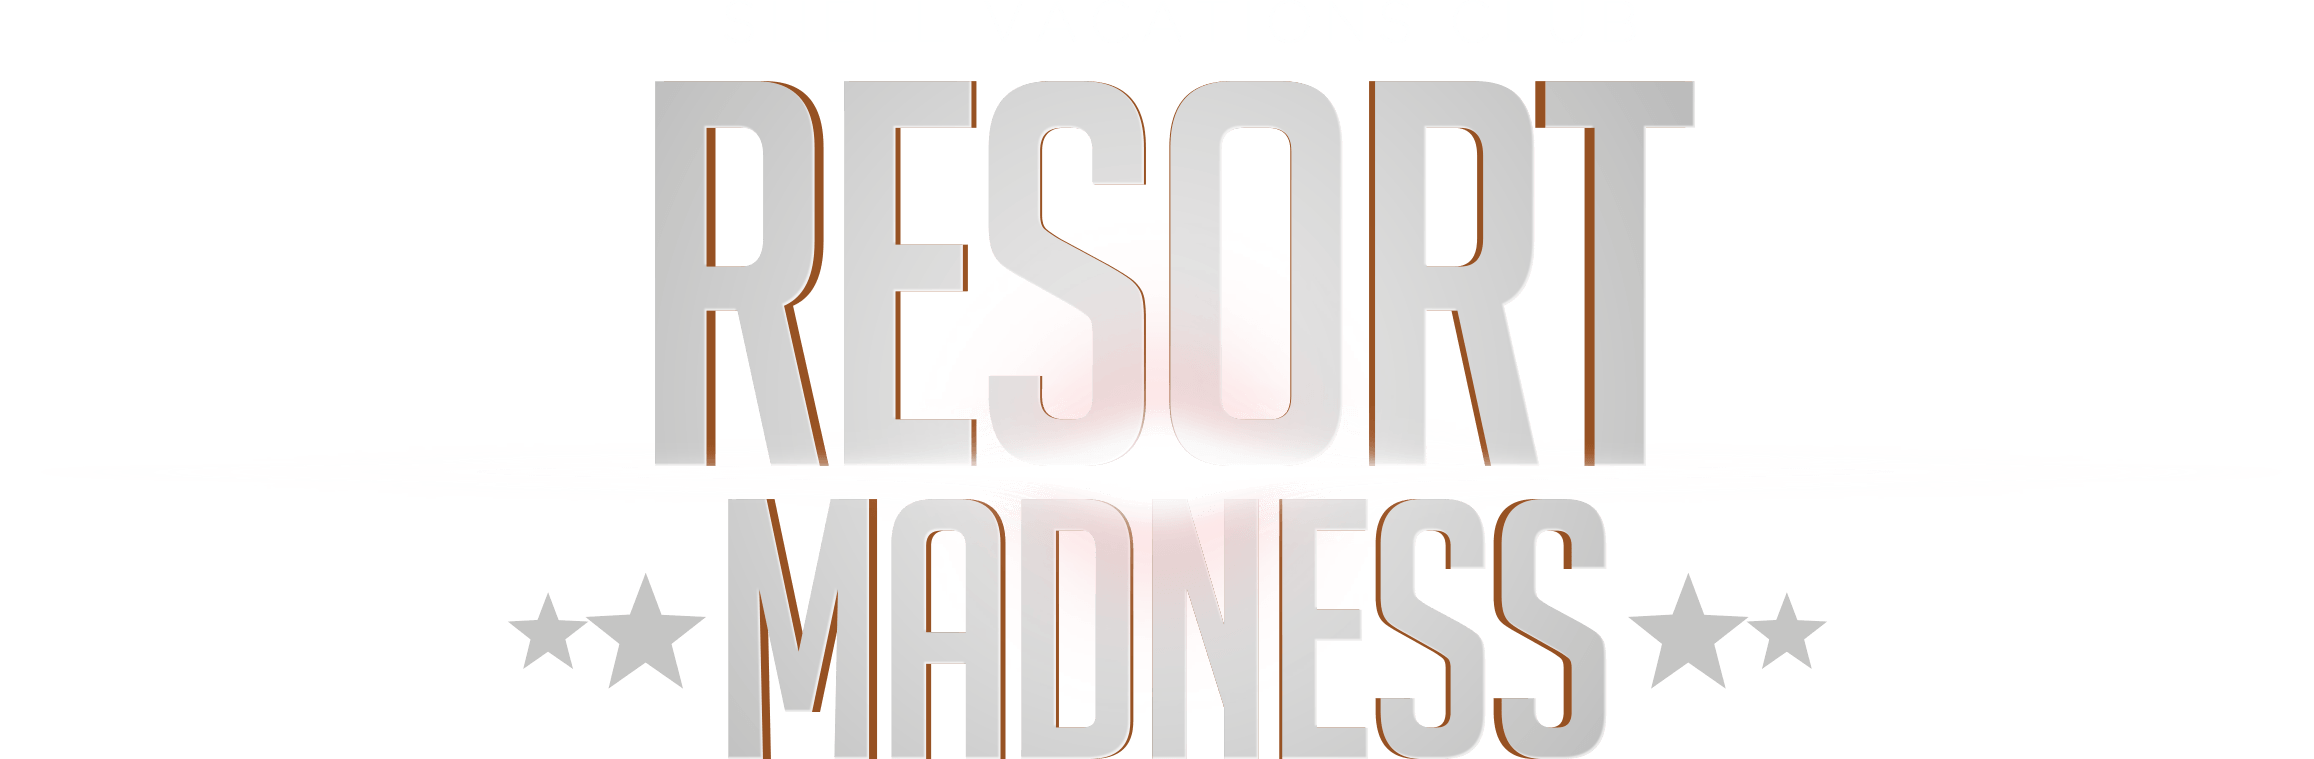 Shell Vacations Club - Resort Madness